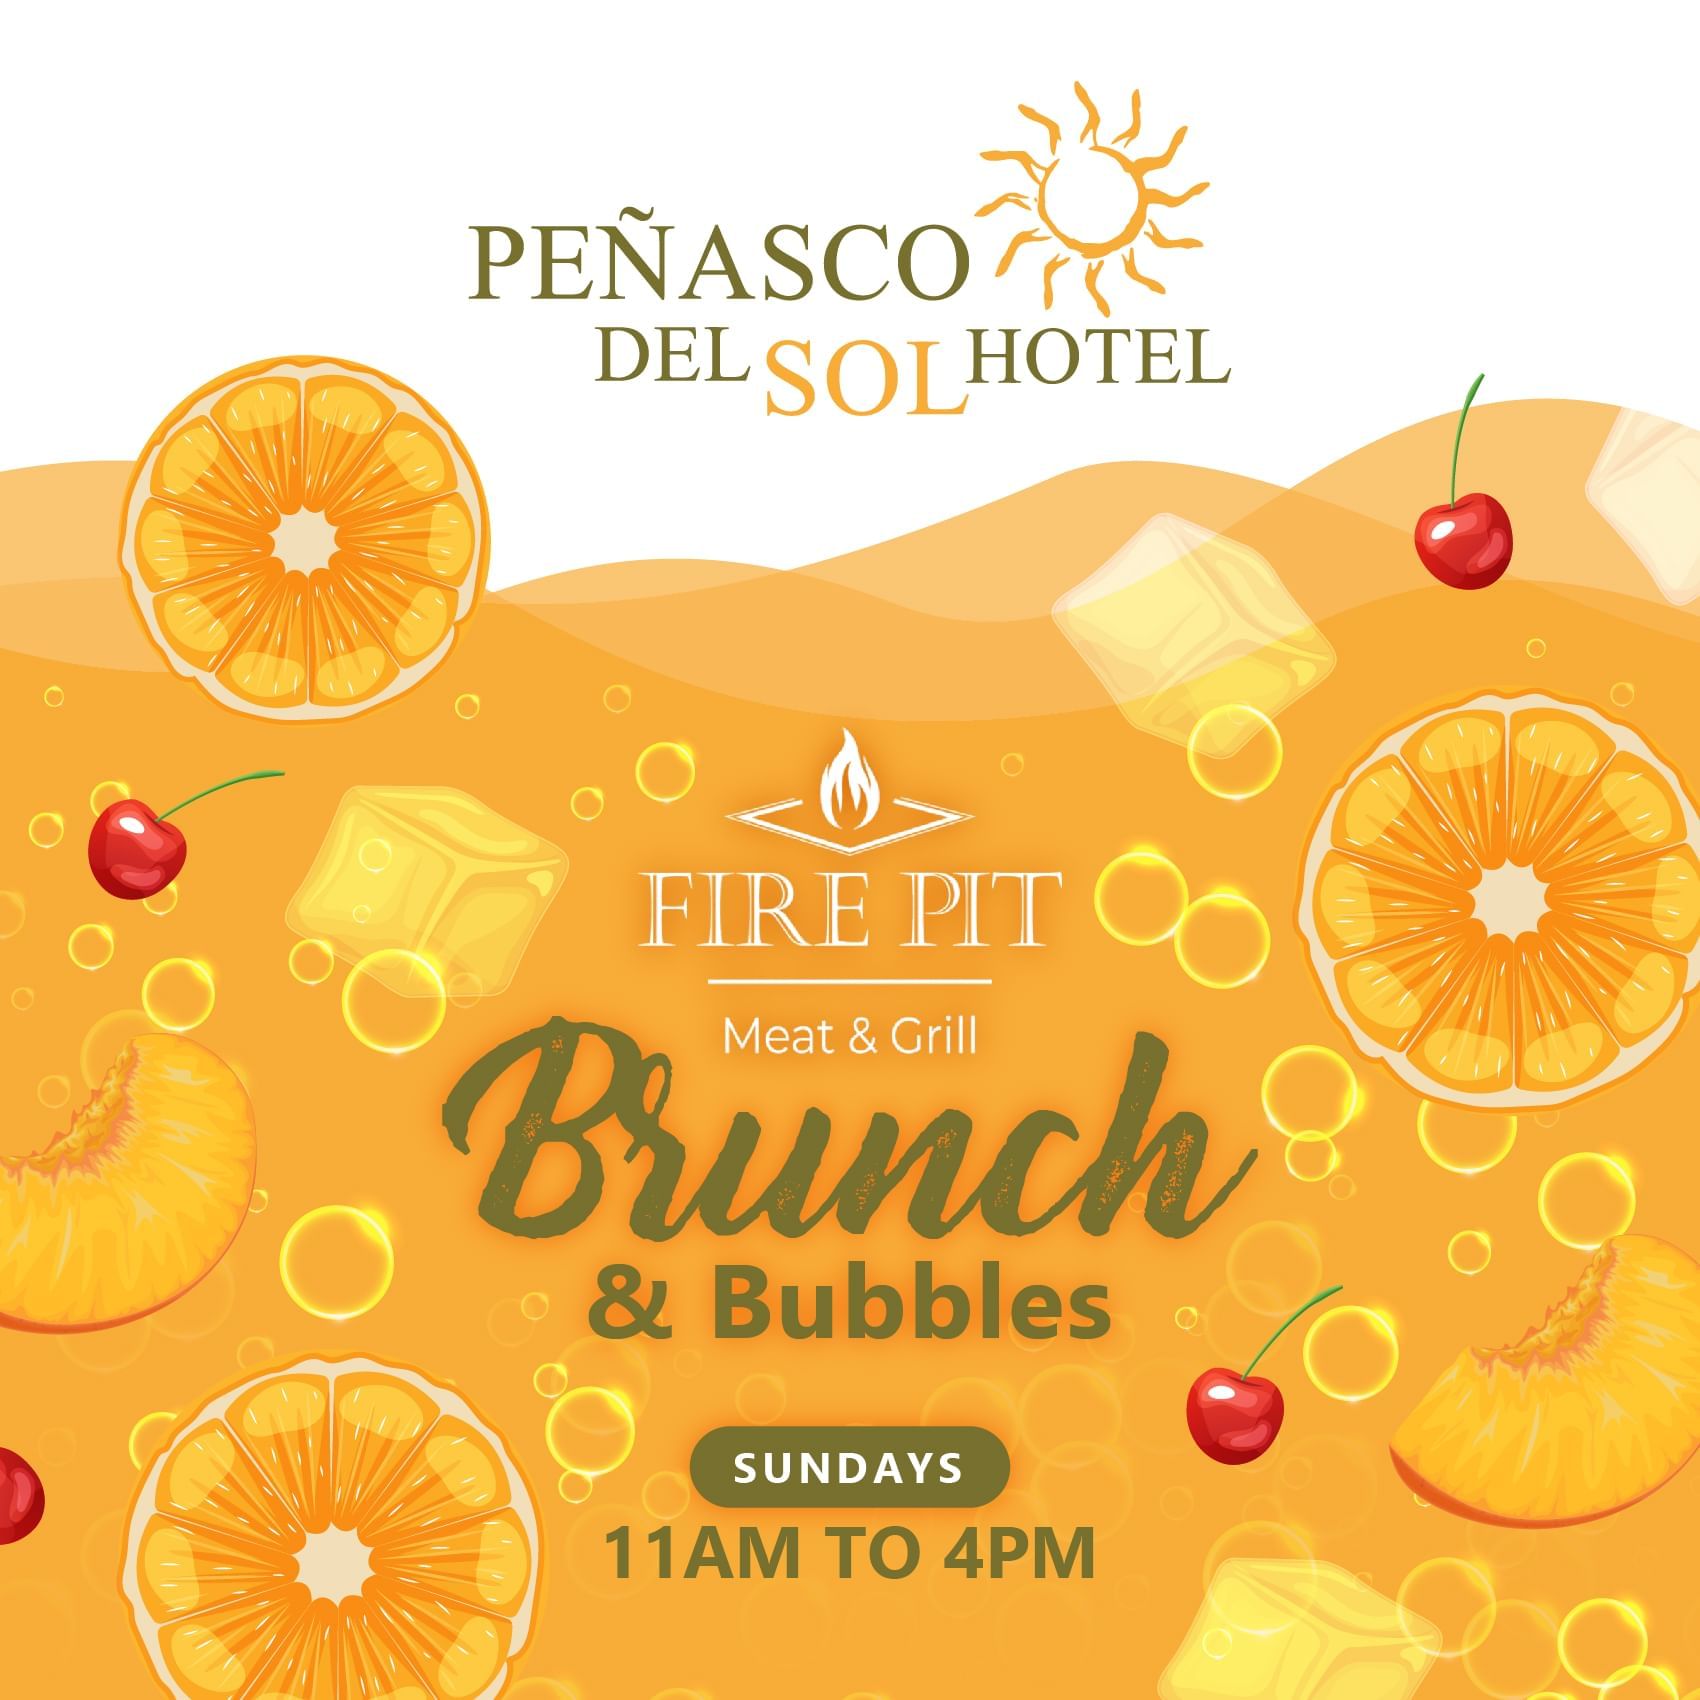 Brunch & Bubbles event poster used at Penasco del Sol